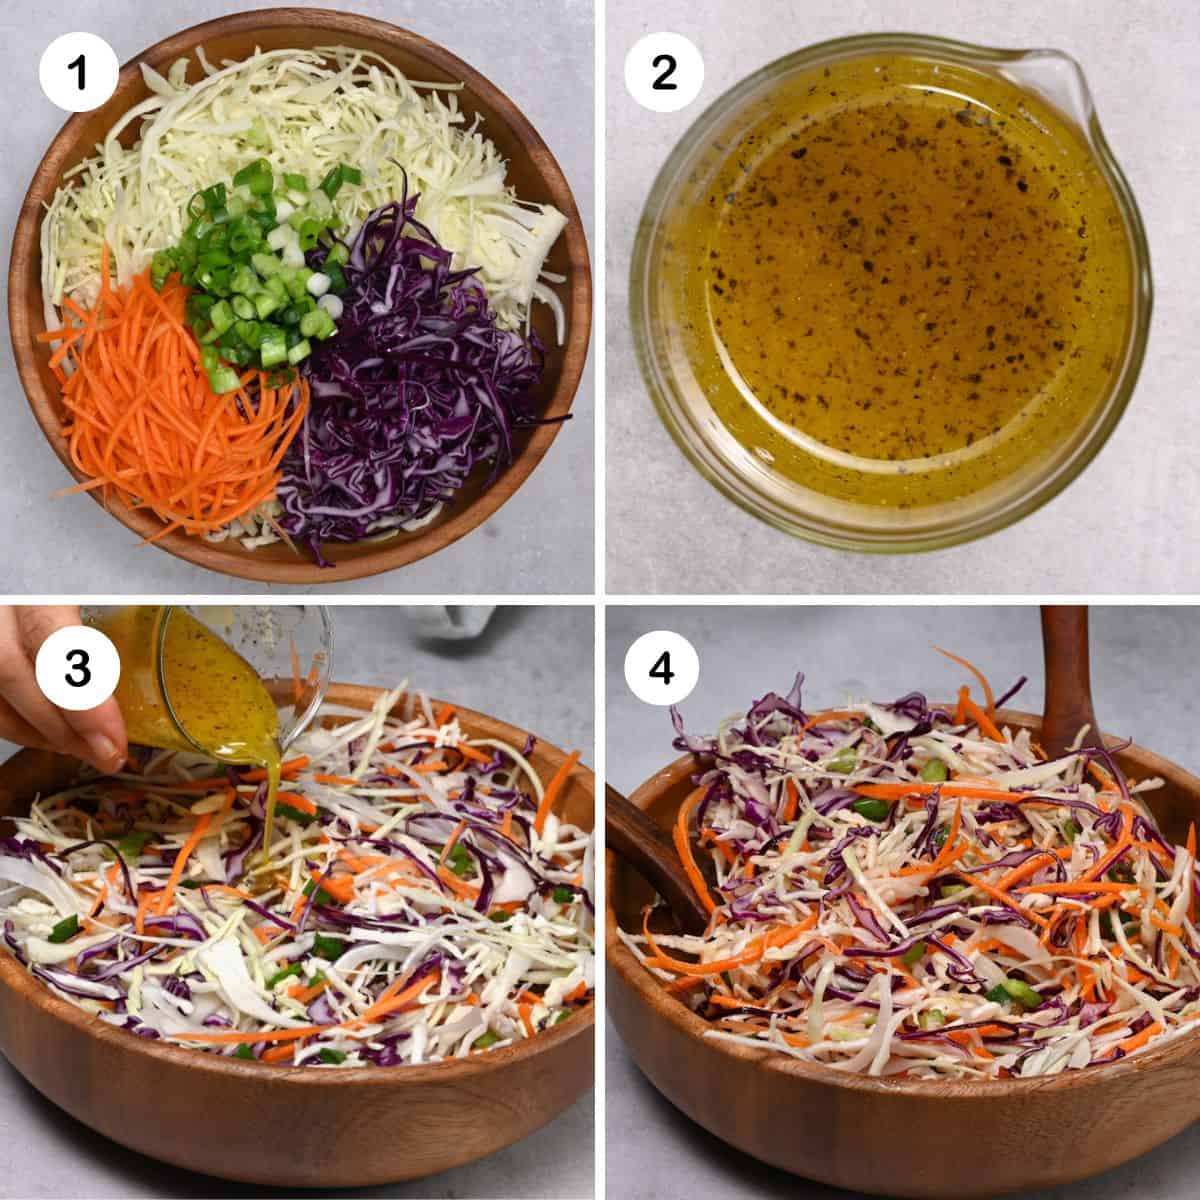 steps for making cabbage salad